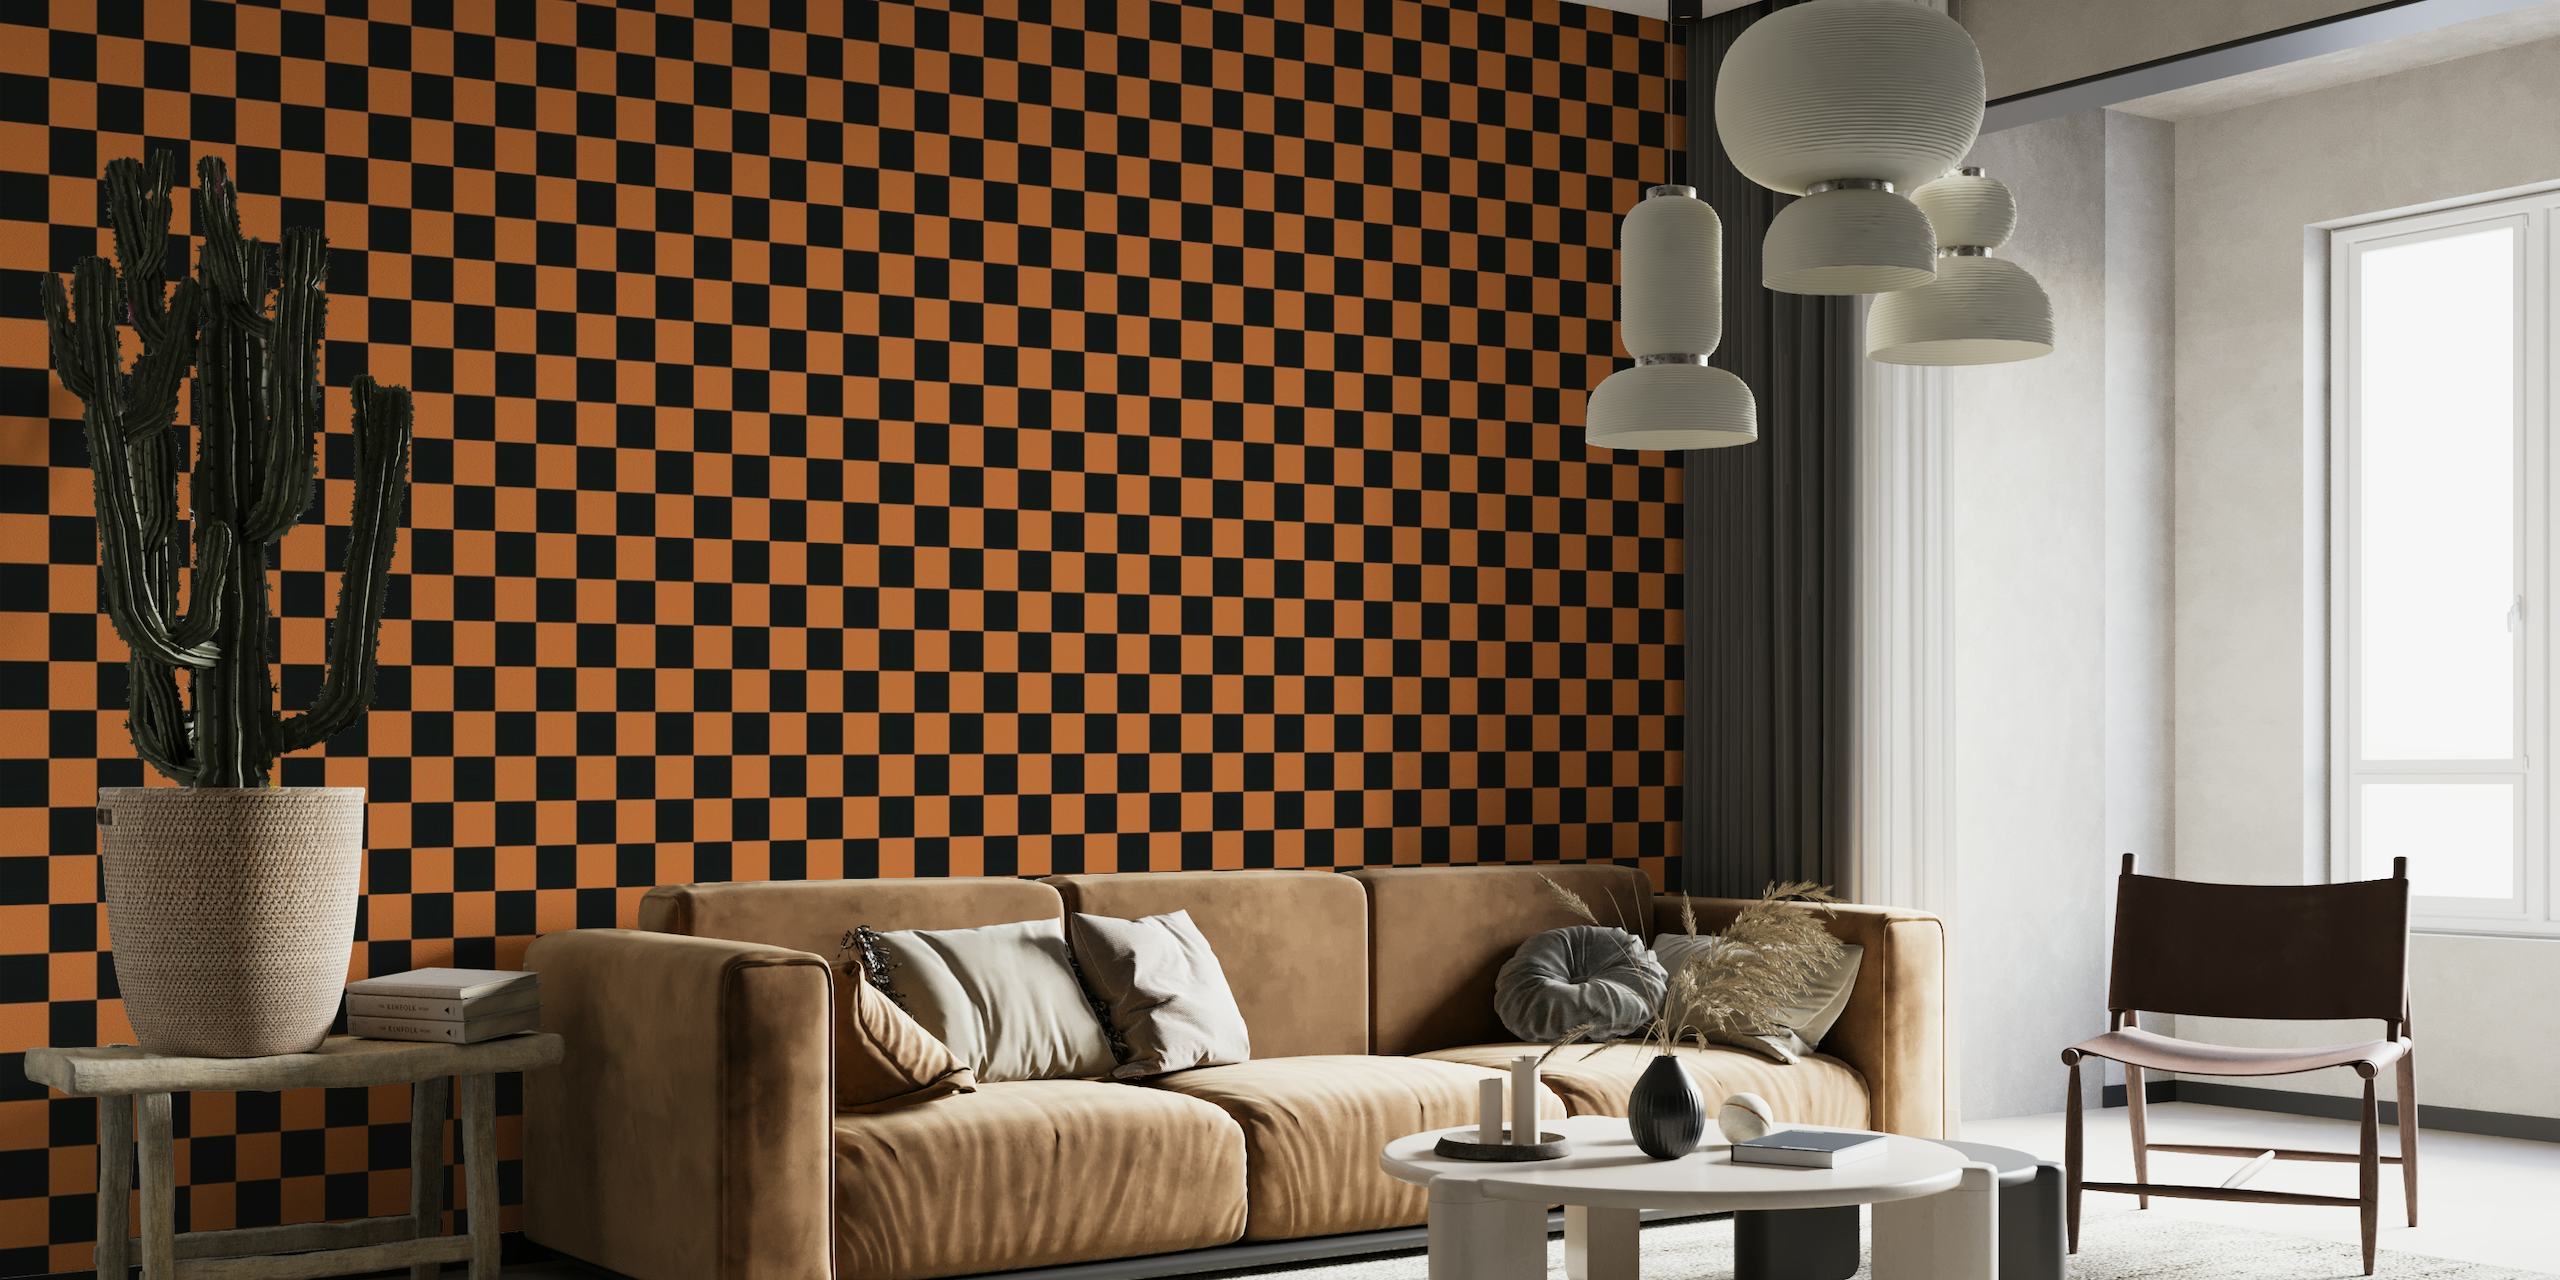 Checkerboard - Orange Brown and Black wallpaper